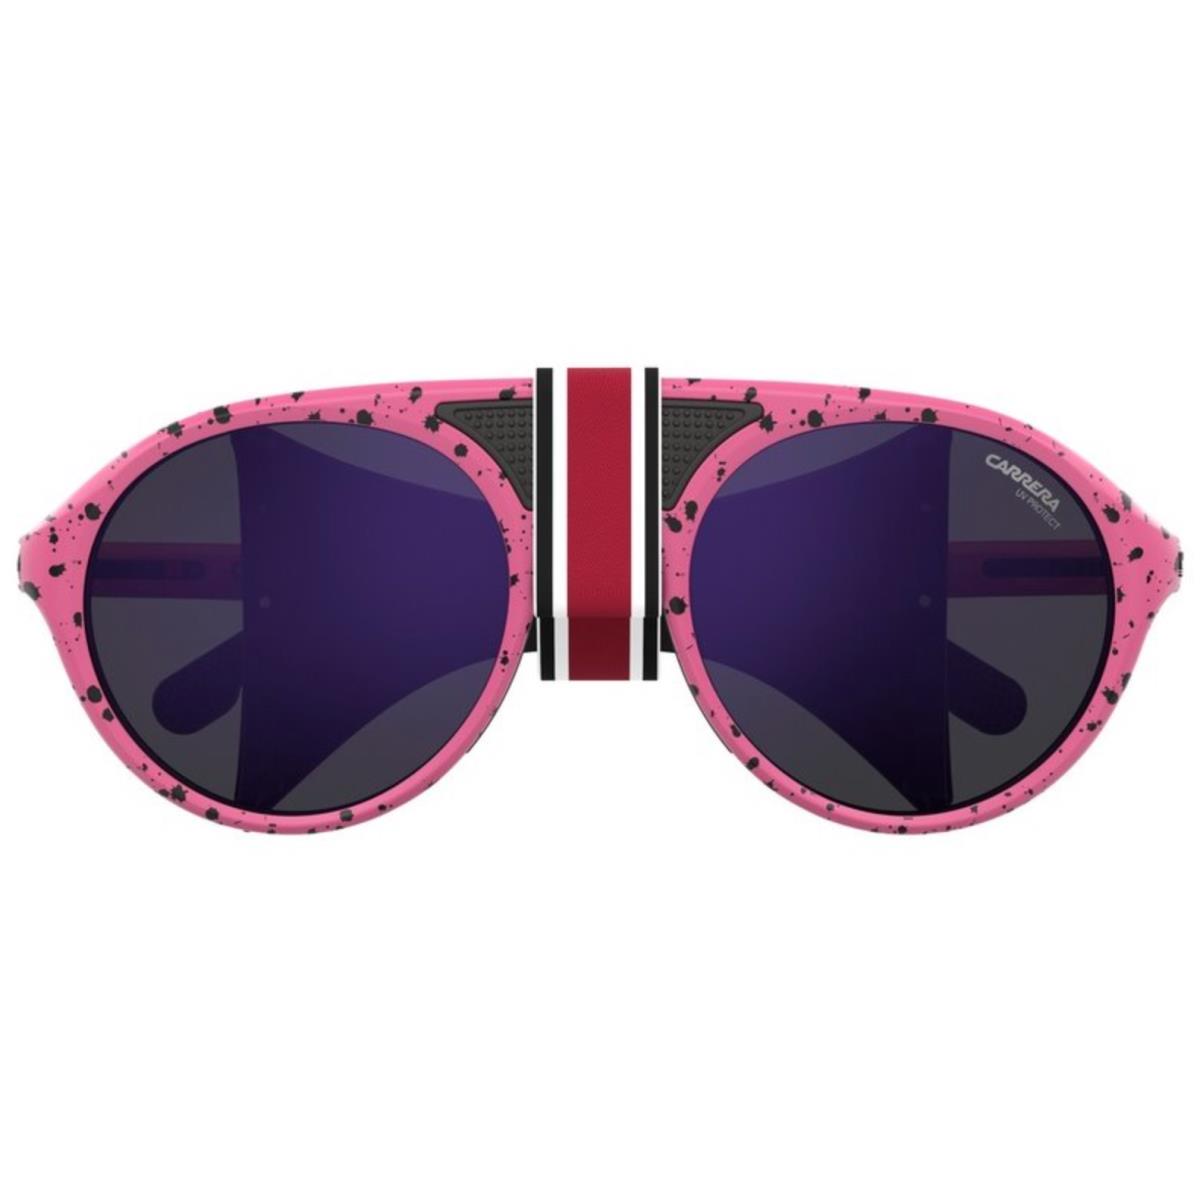 Carrera sunglasses  - Pink Frame 0